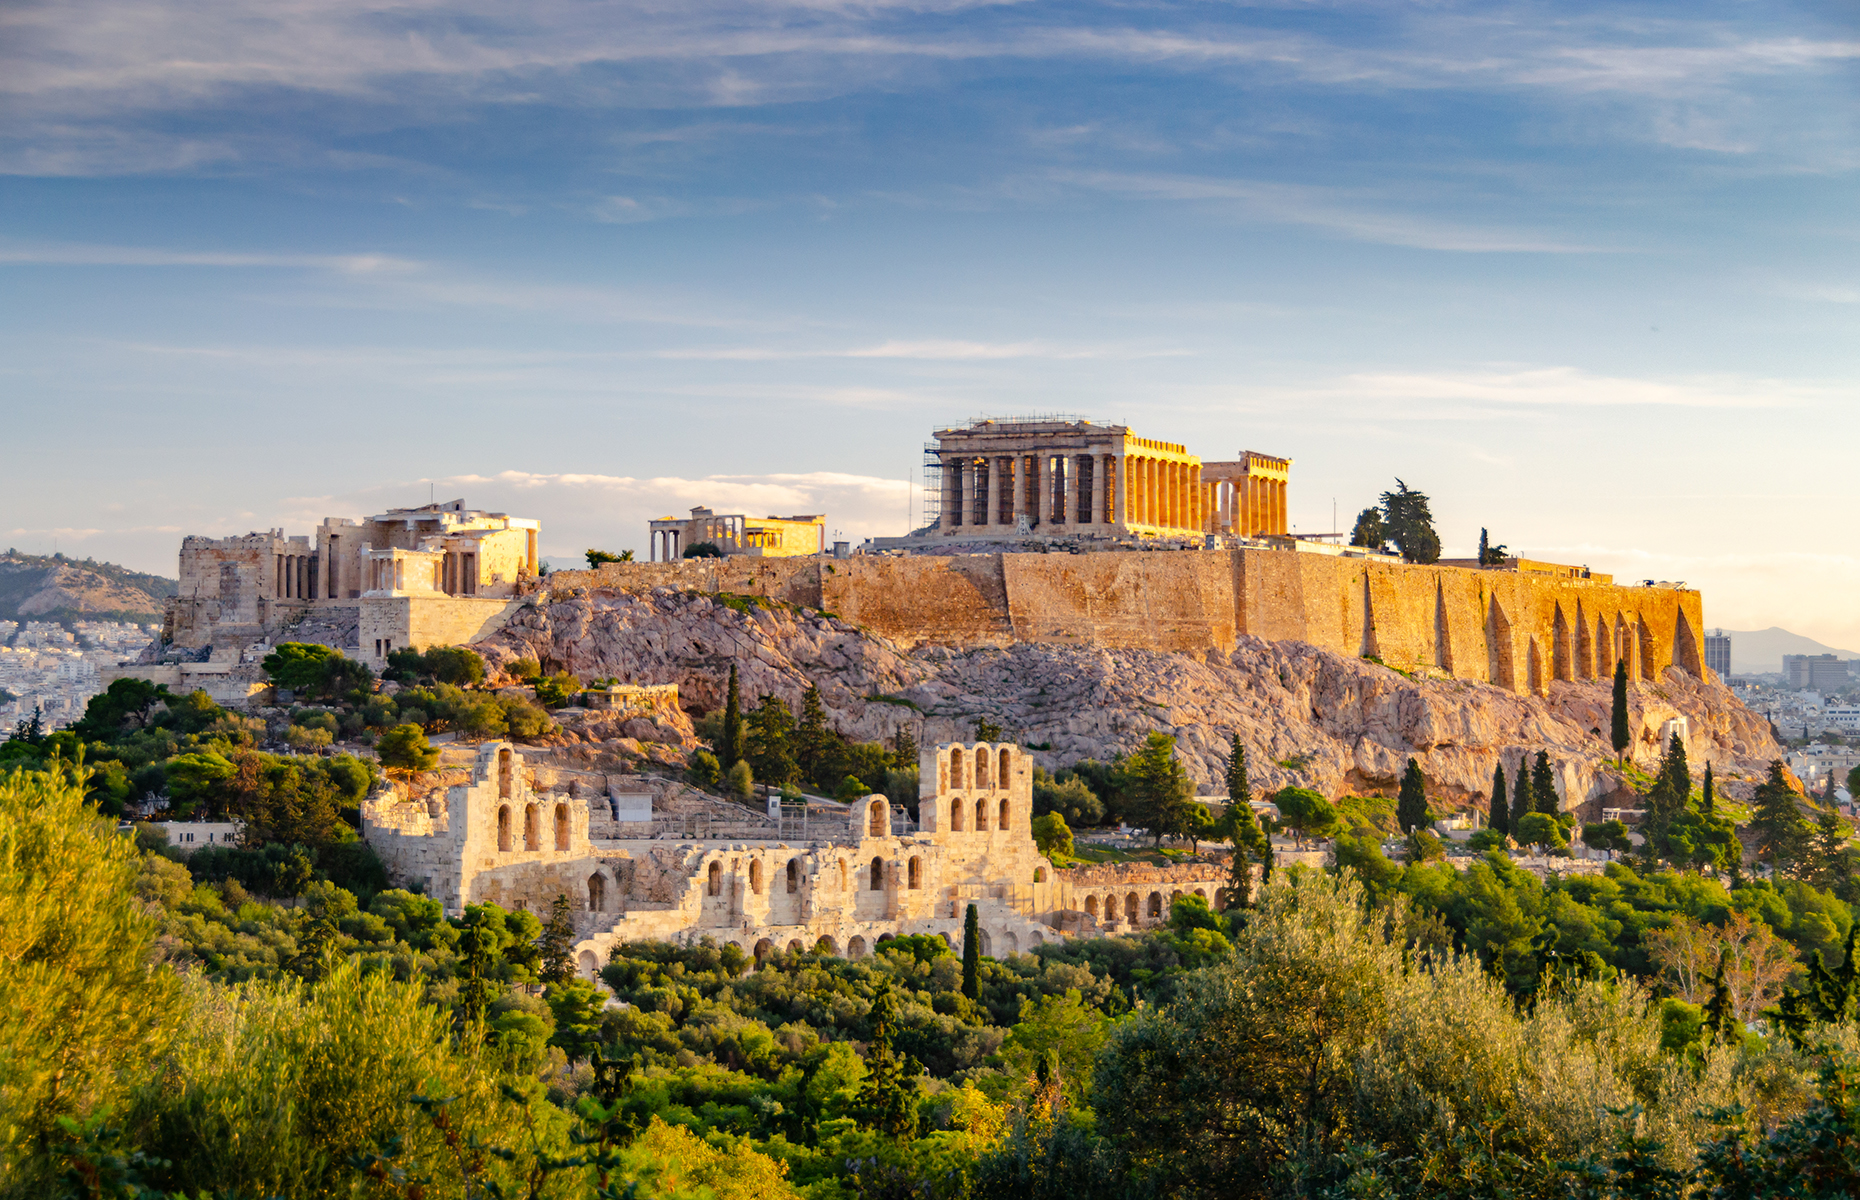 Acropolis, Athens, Greece. (Image: Ella Miller/Shutterstock)